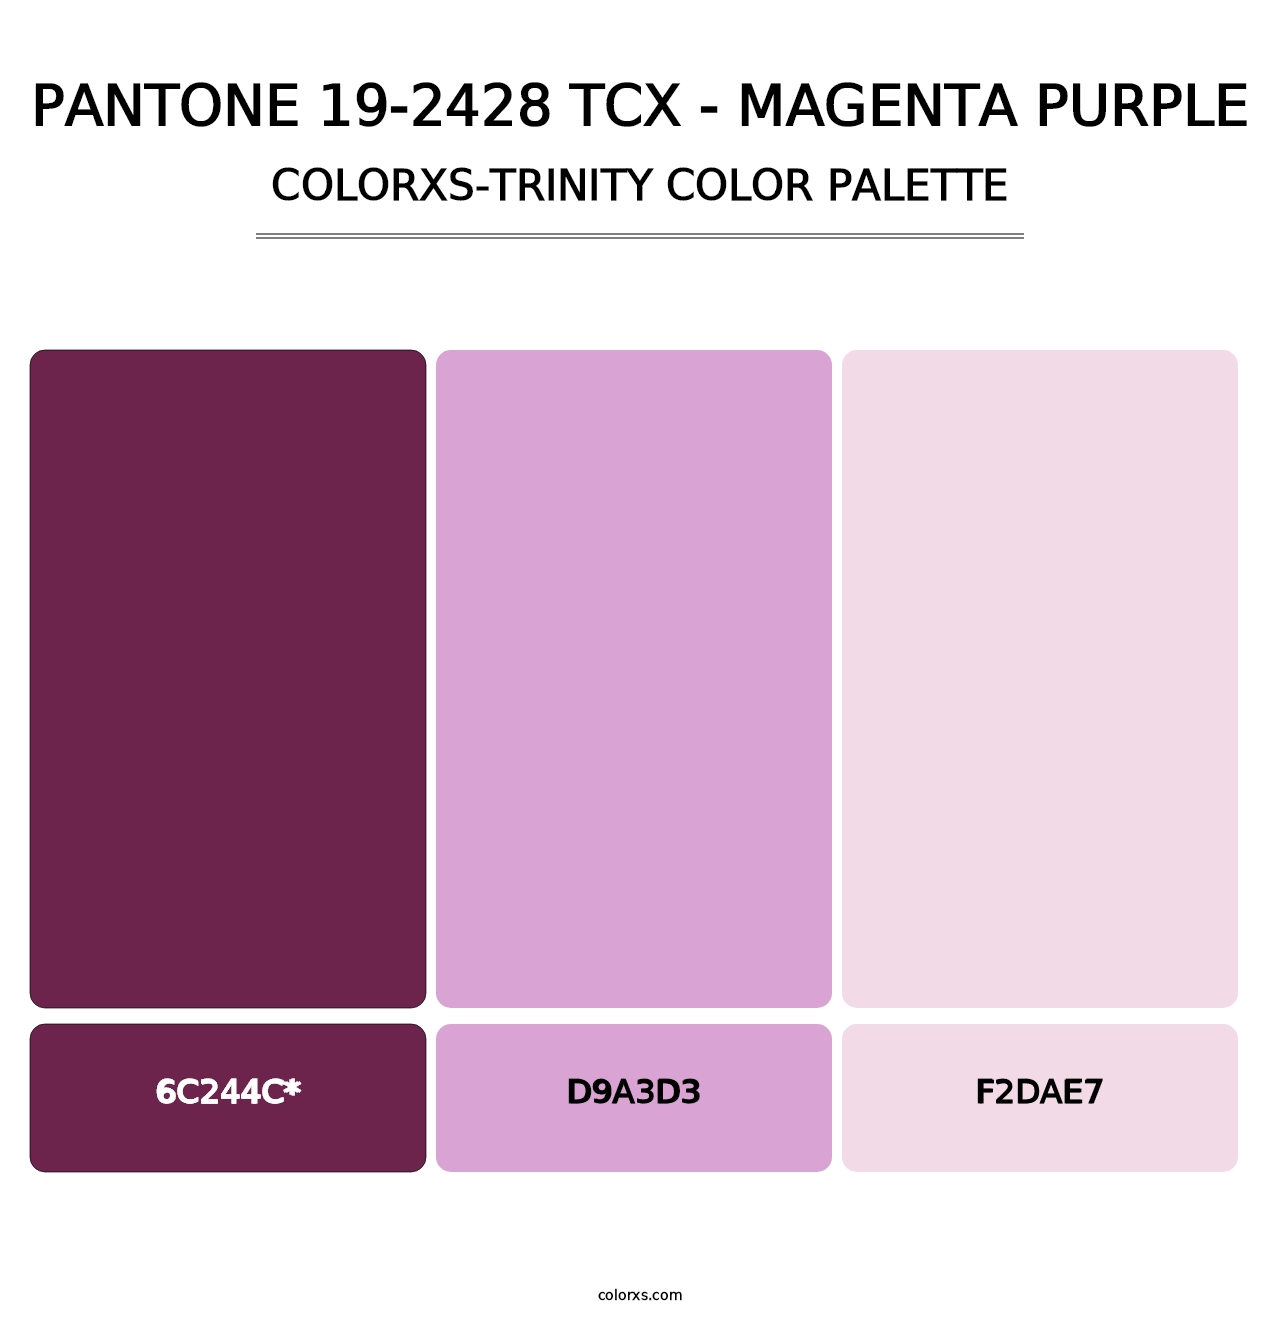 PANTONE 19-2428 TCX - Magenta Purple - Colorxs Trinity Palette